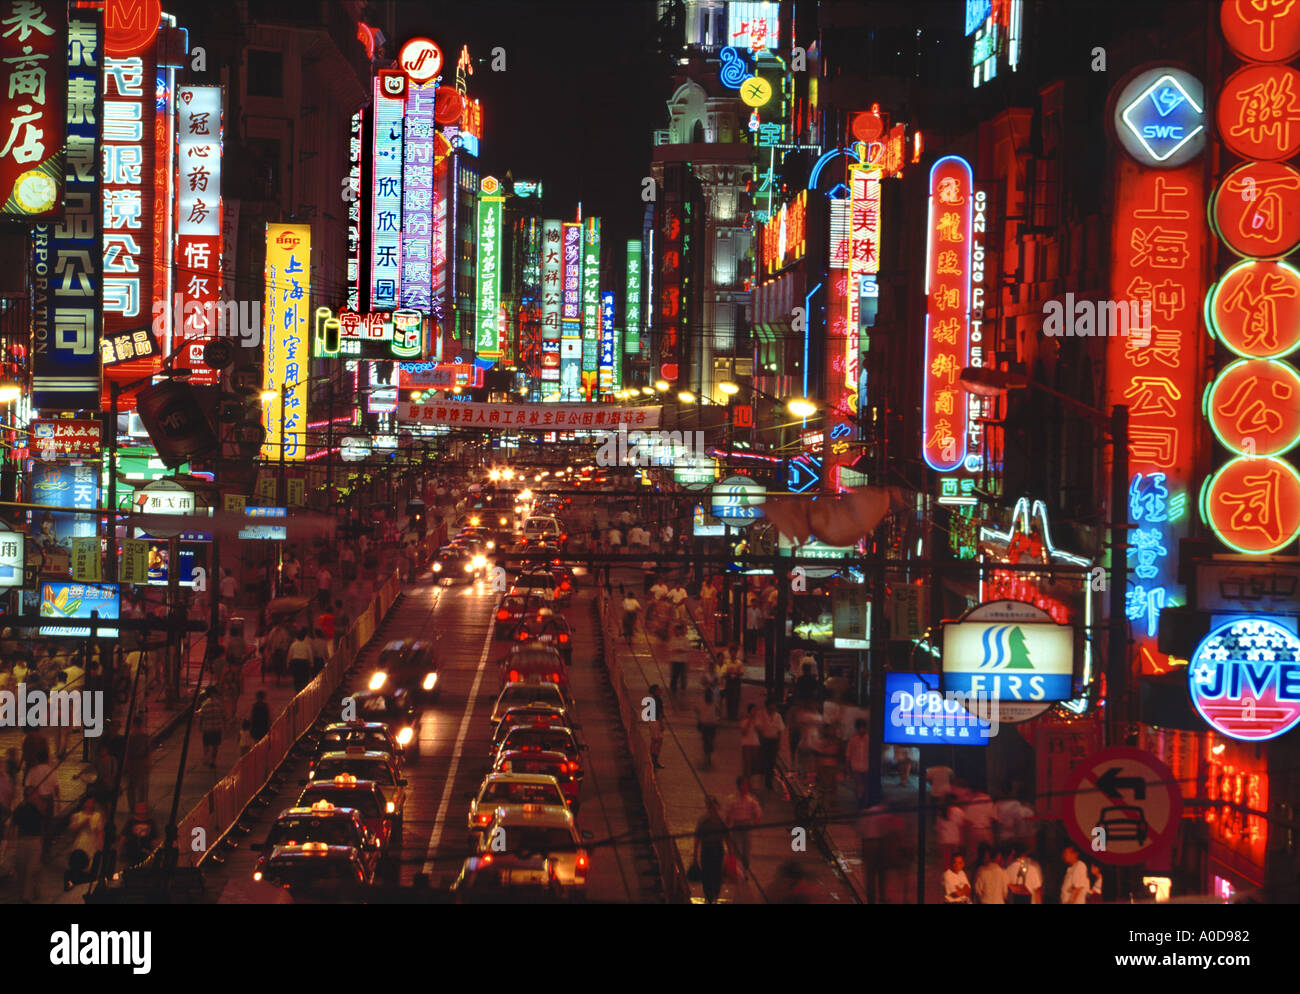 Neon lights on Nanjing Road at night Shanghai China Stock Photo - Alamy